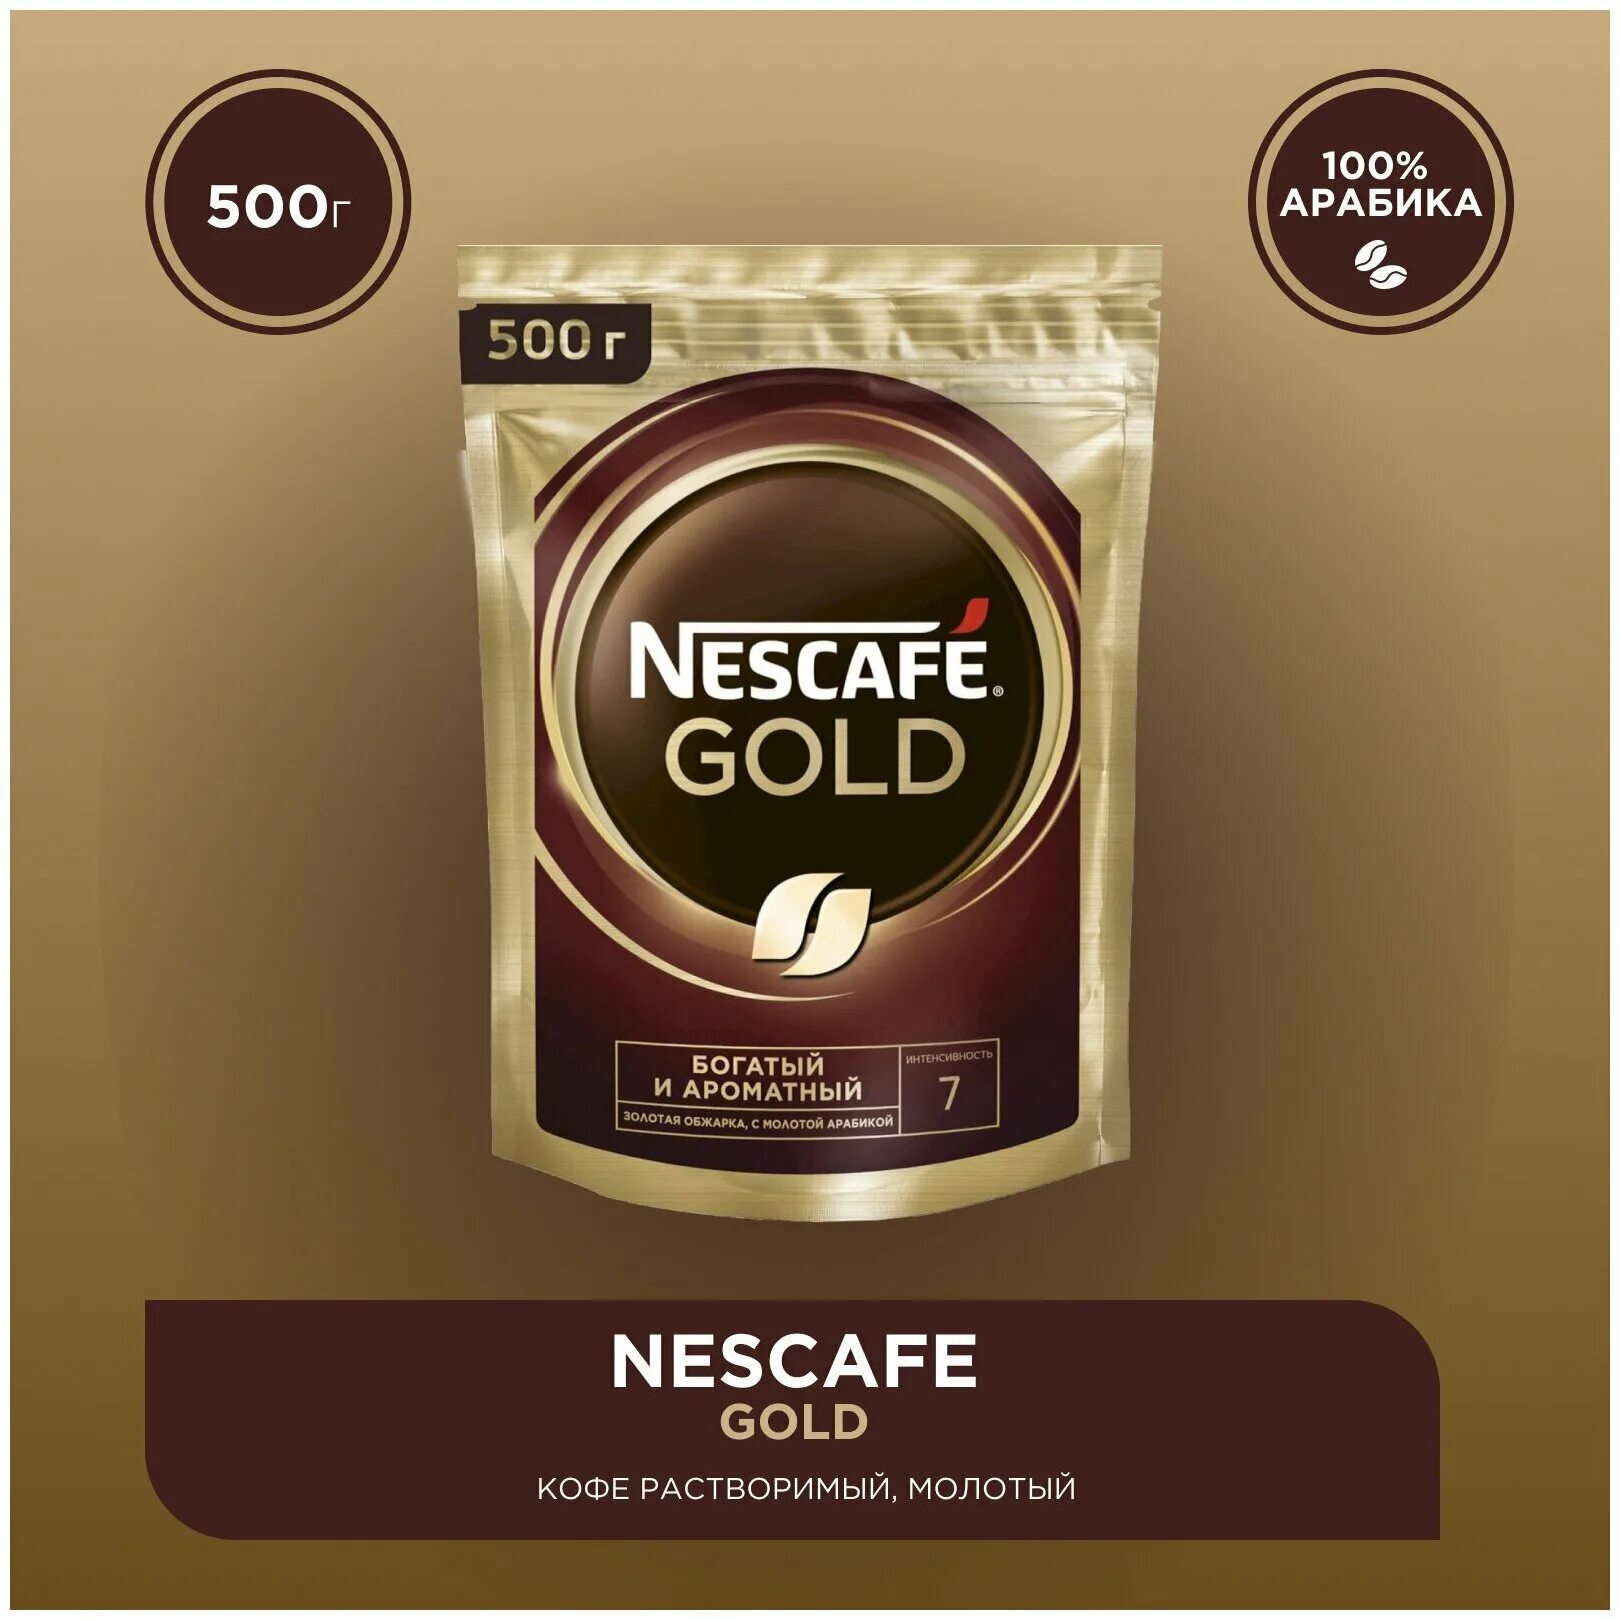 Nescafe gold пакет. Nescafe Gold 750 гр. Нескафе Голд 500 гр. Нескафе Голд 900 гр. Нескафе Голд 320 гр.